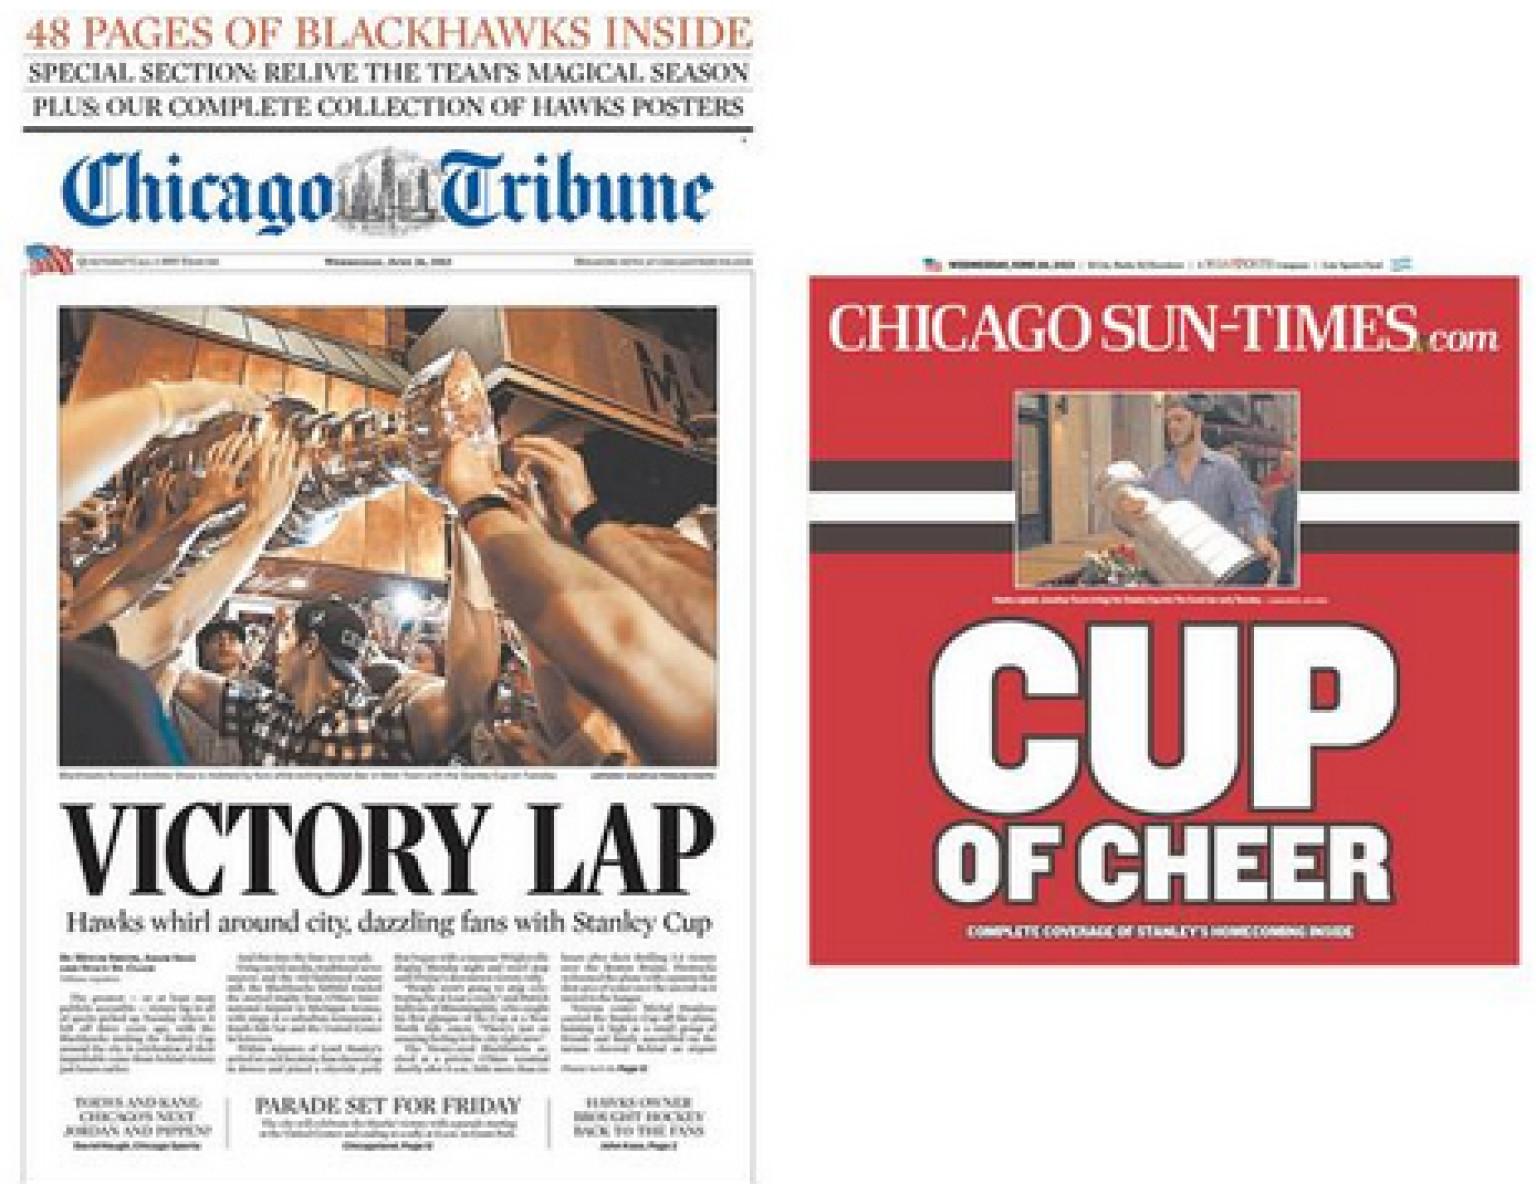 Comparison Of Chicago Sun-Times & Chicago Tribune Stanley Cup Photos 